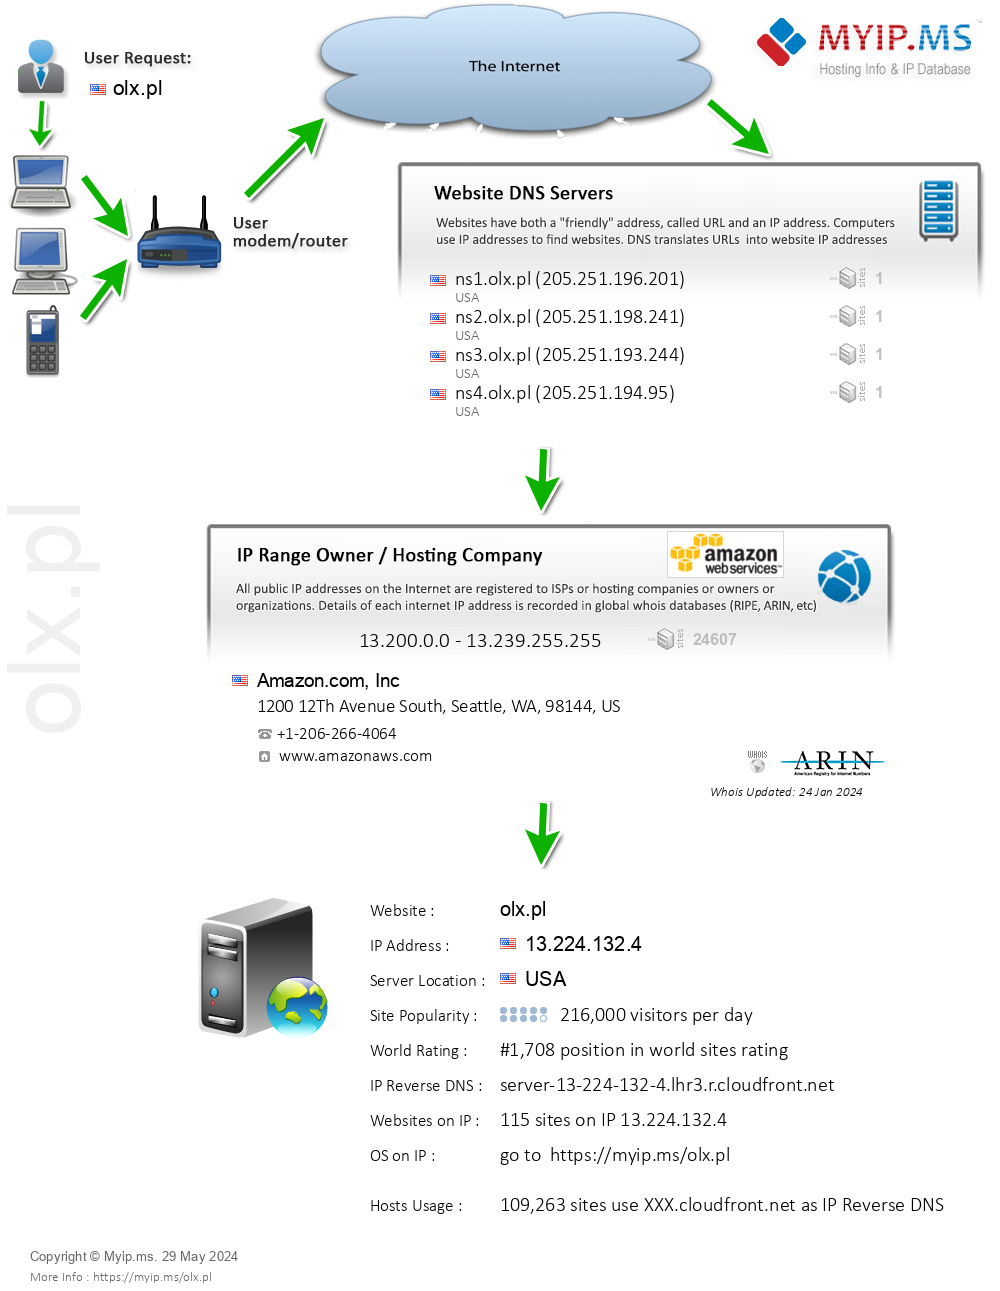 Olx.pl - Website Hosting Visual IP Diagram